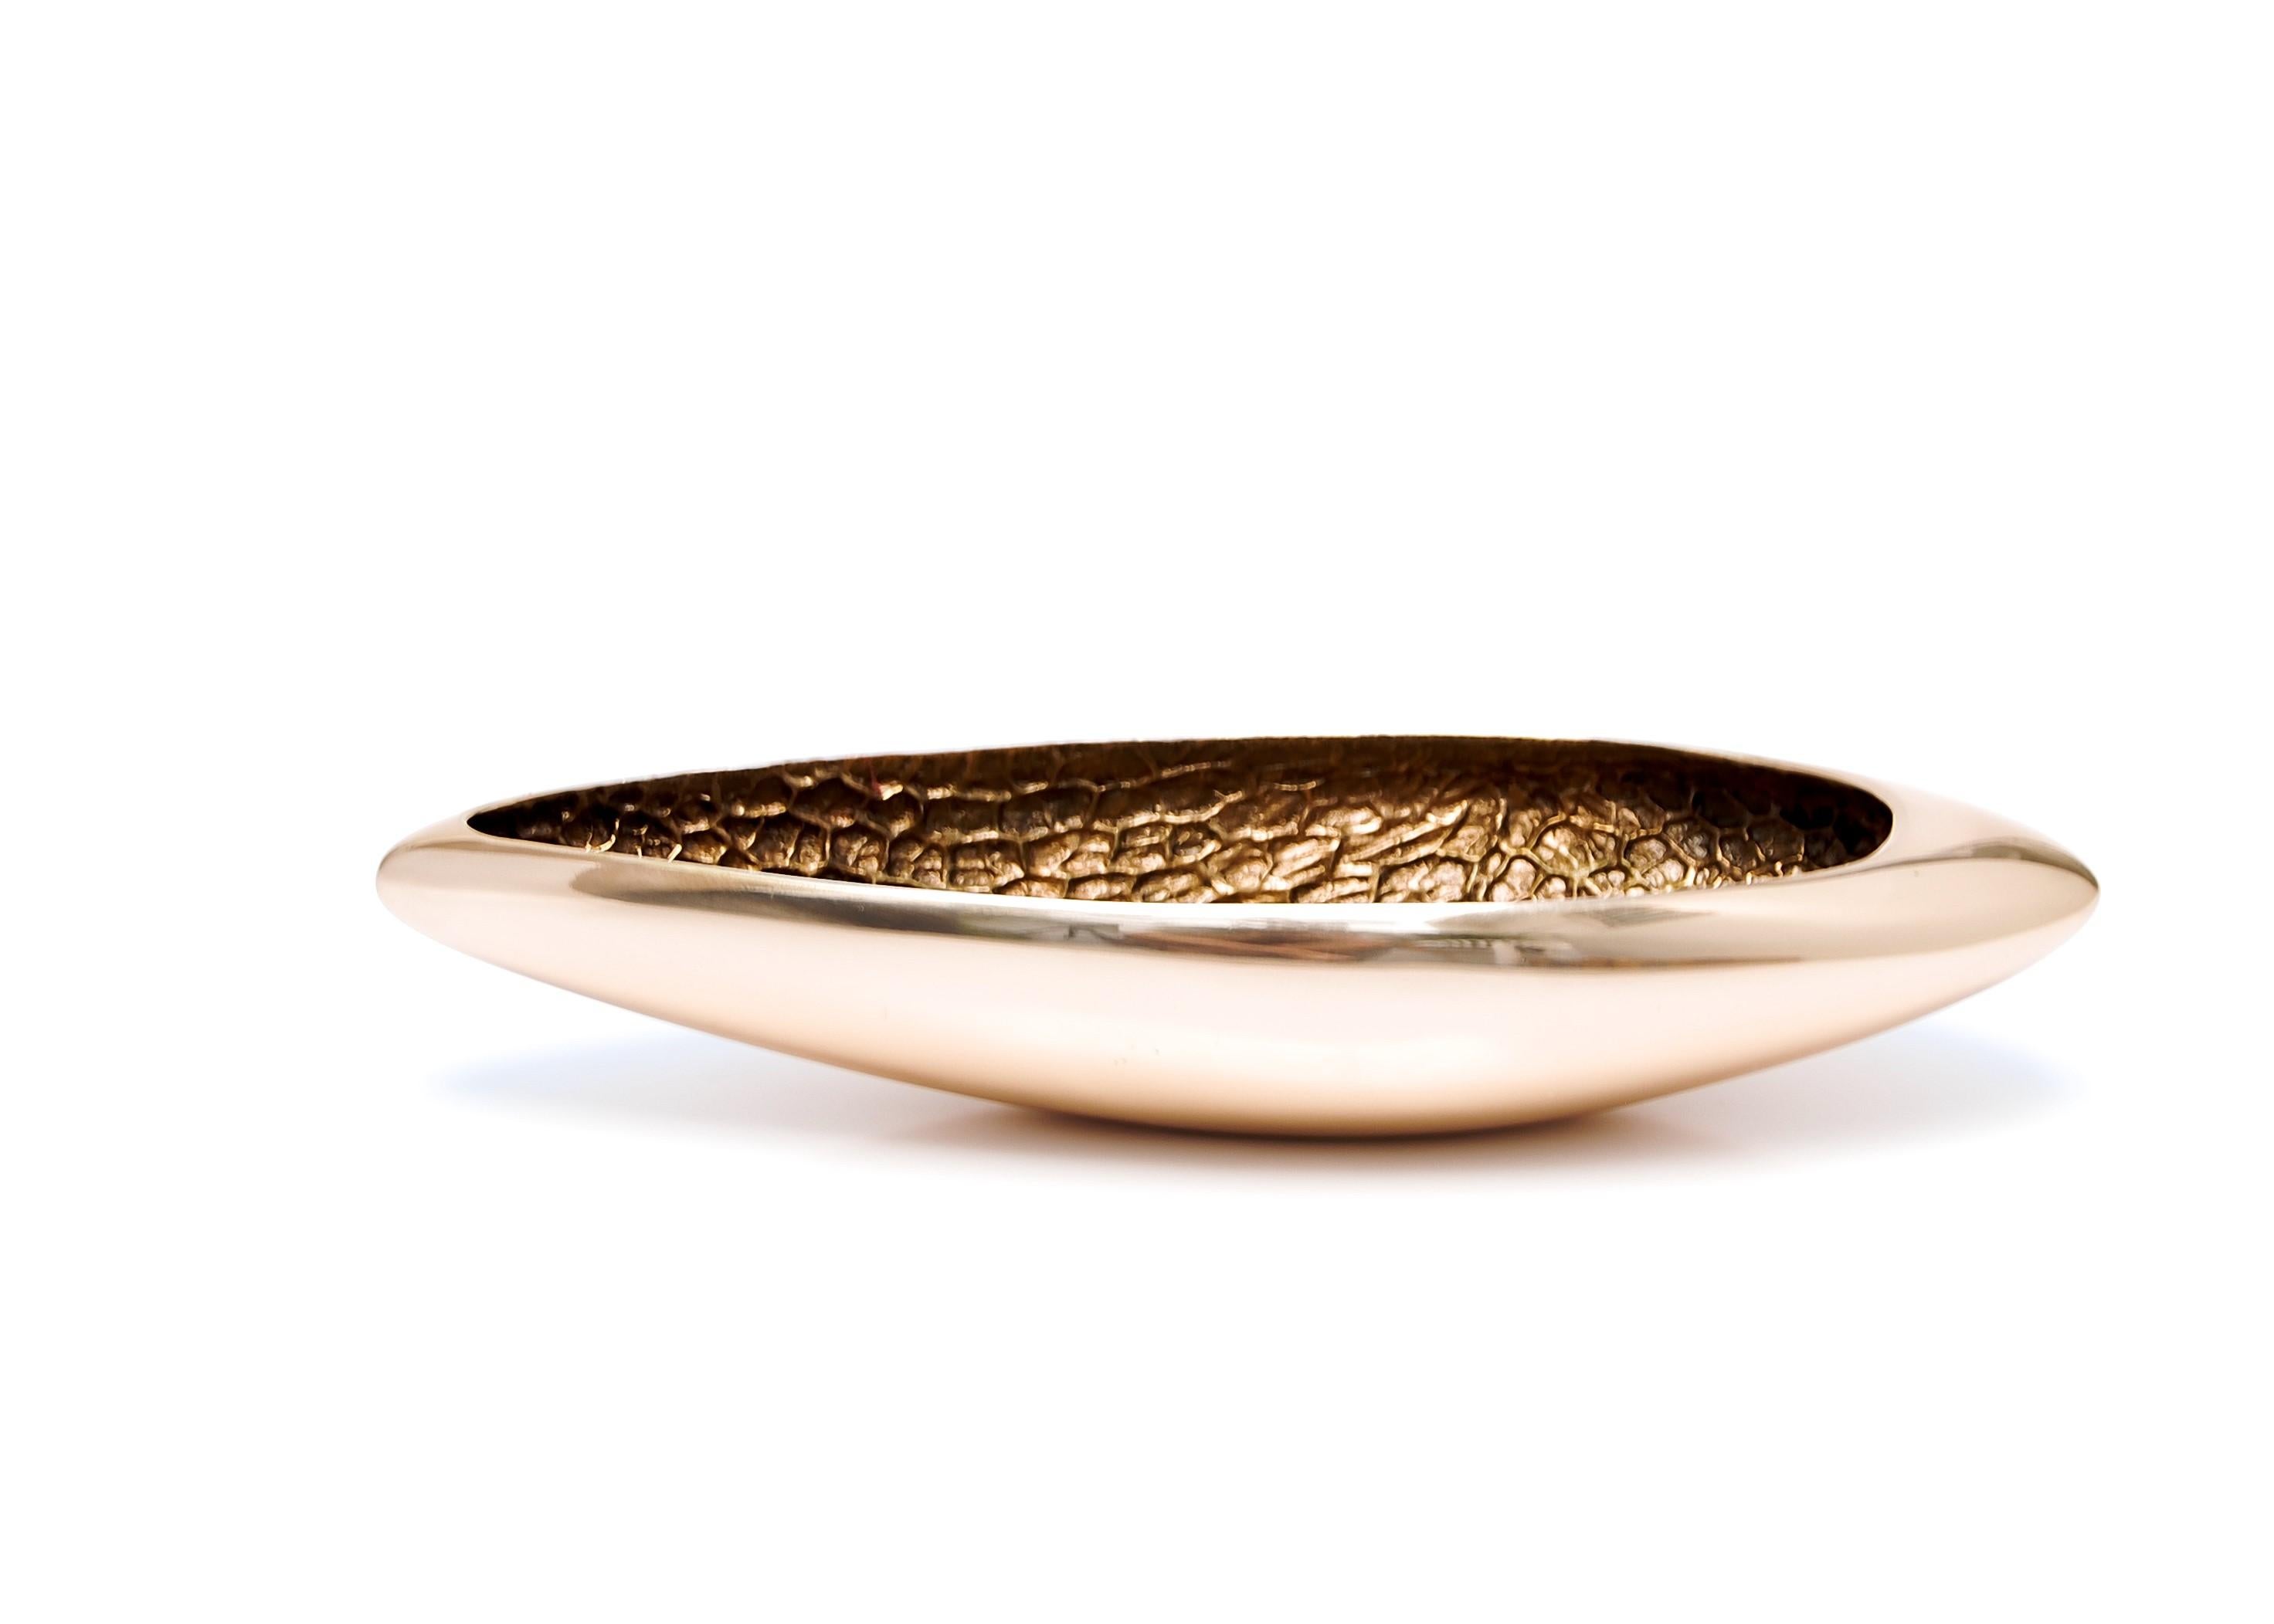 Modern Bowl, Centerpiece in Polished Bronze by Fakasaka Design